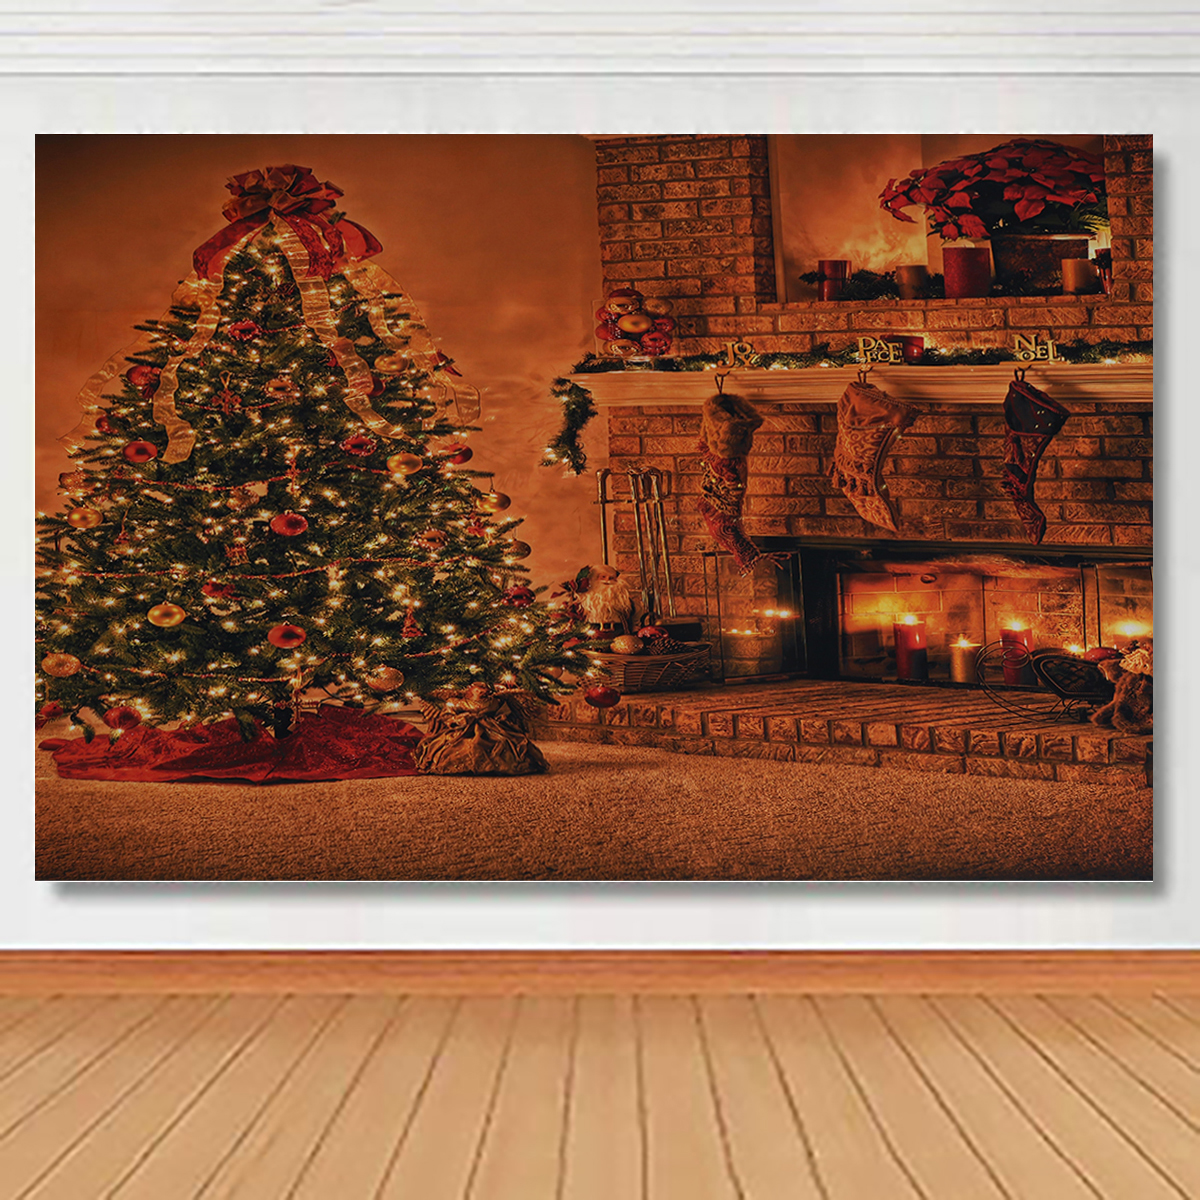 1x15m-15x22m-18x25m-Christmas-Tree-Fireplace-Socks-Photography-Backdrop-Cloth-for-Photo-Studio-Backd-1764545-5